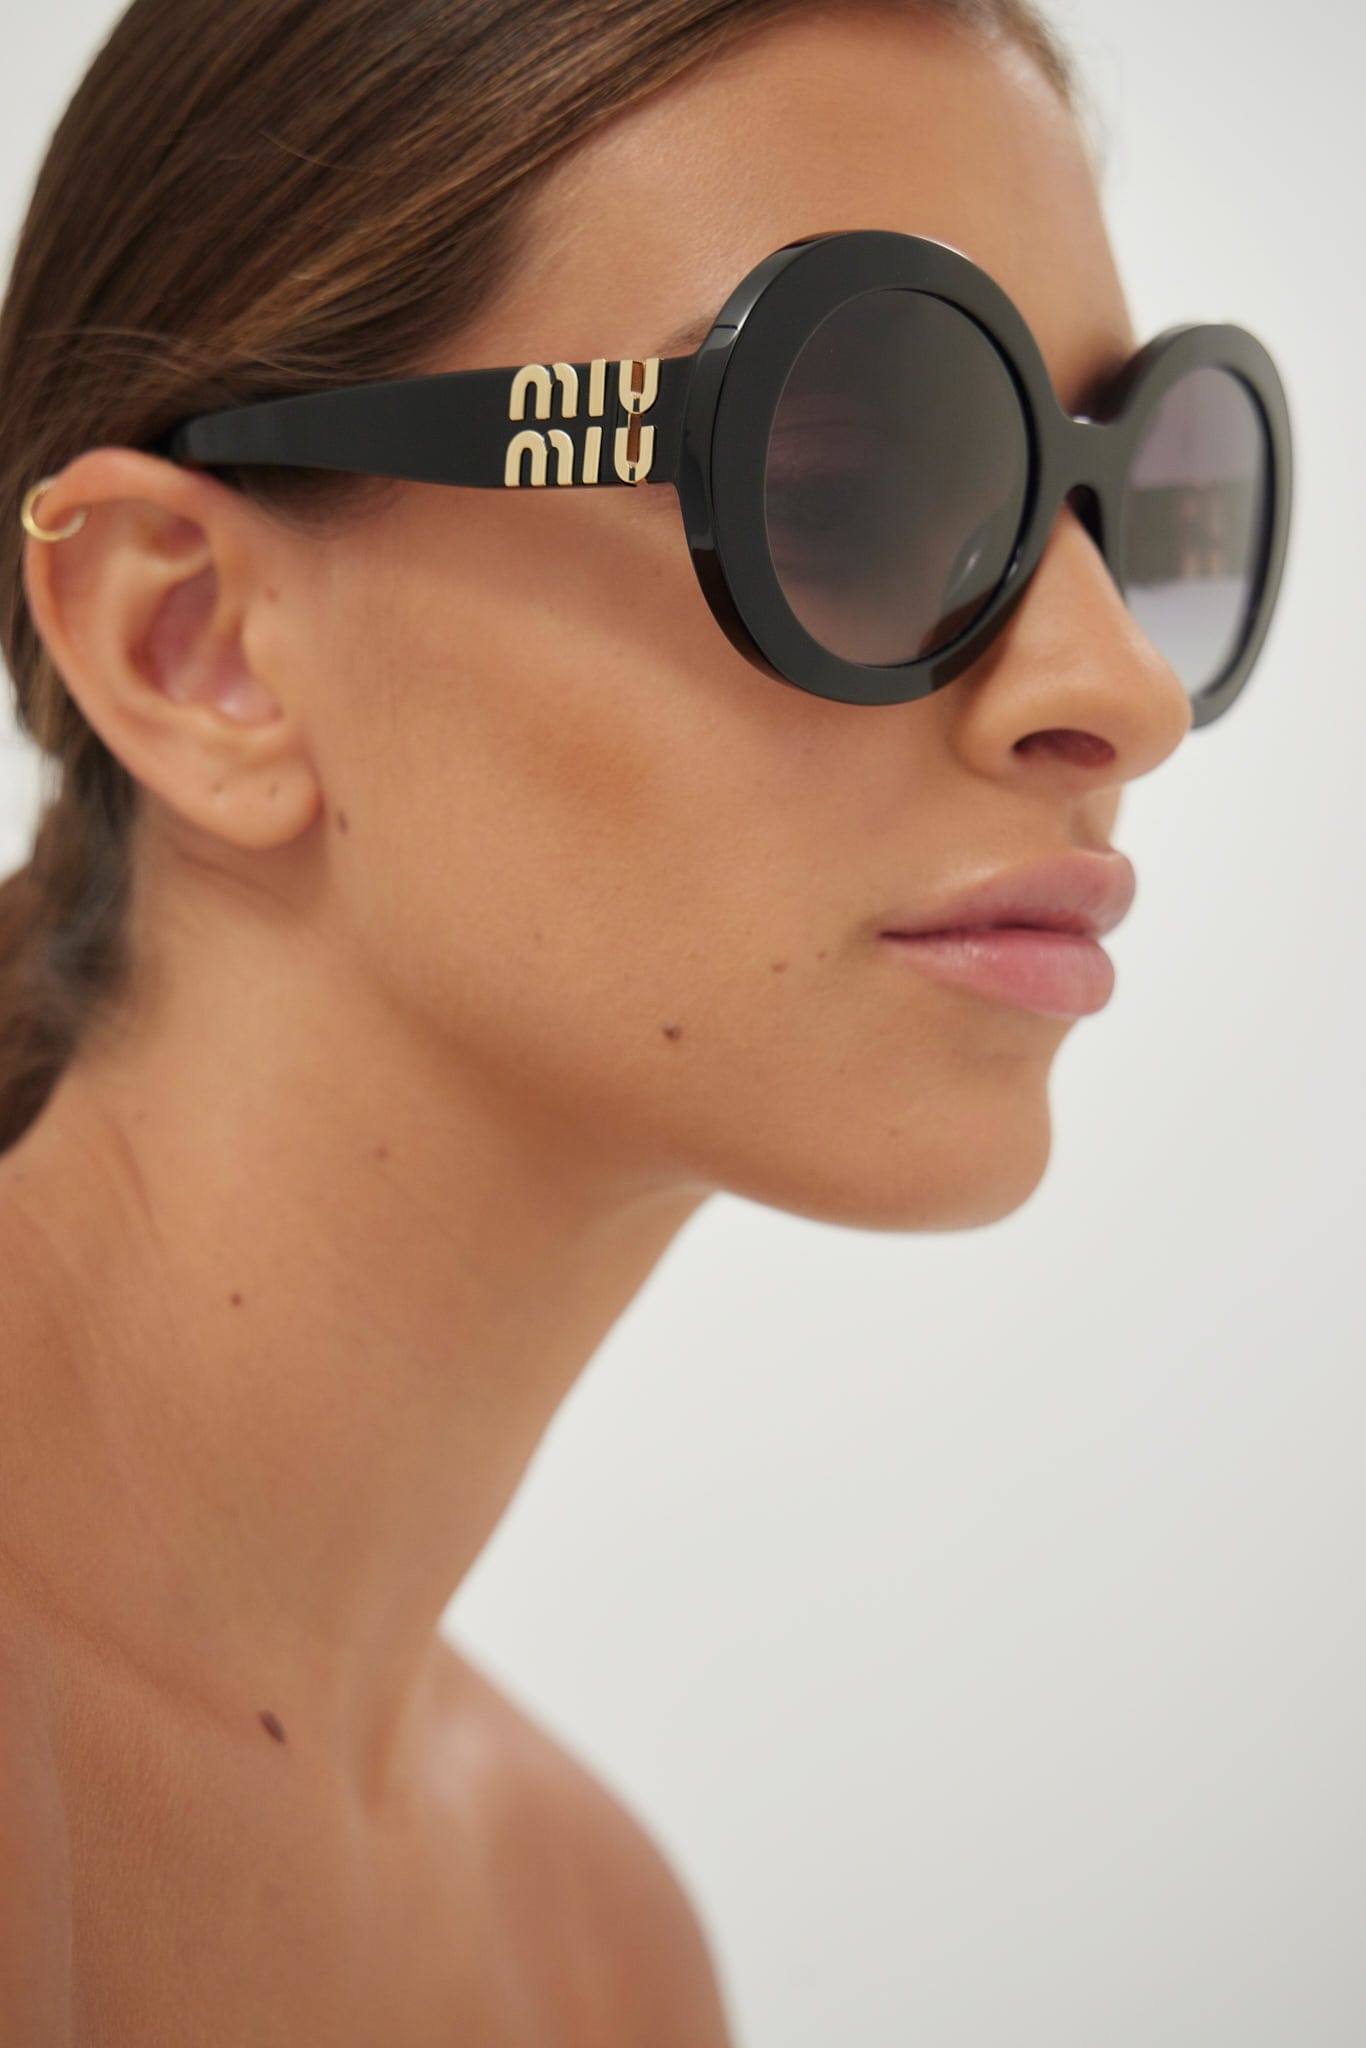 Miu Miu round black sunglasses - Eyewear Club